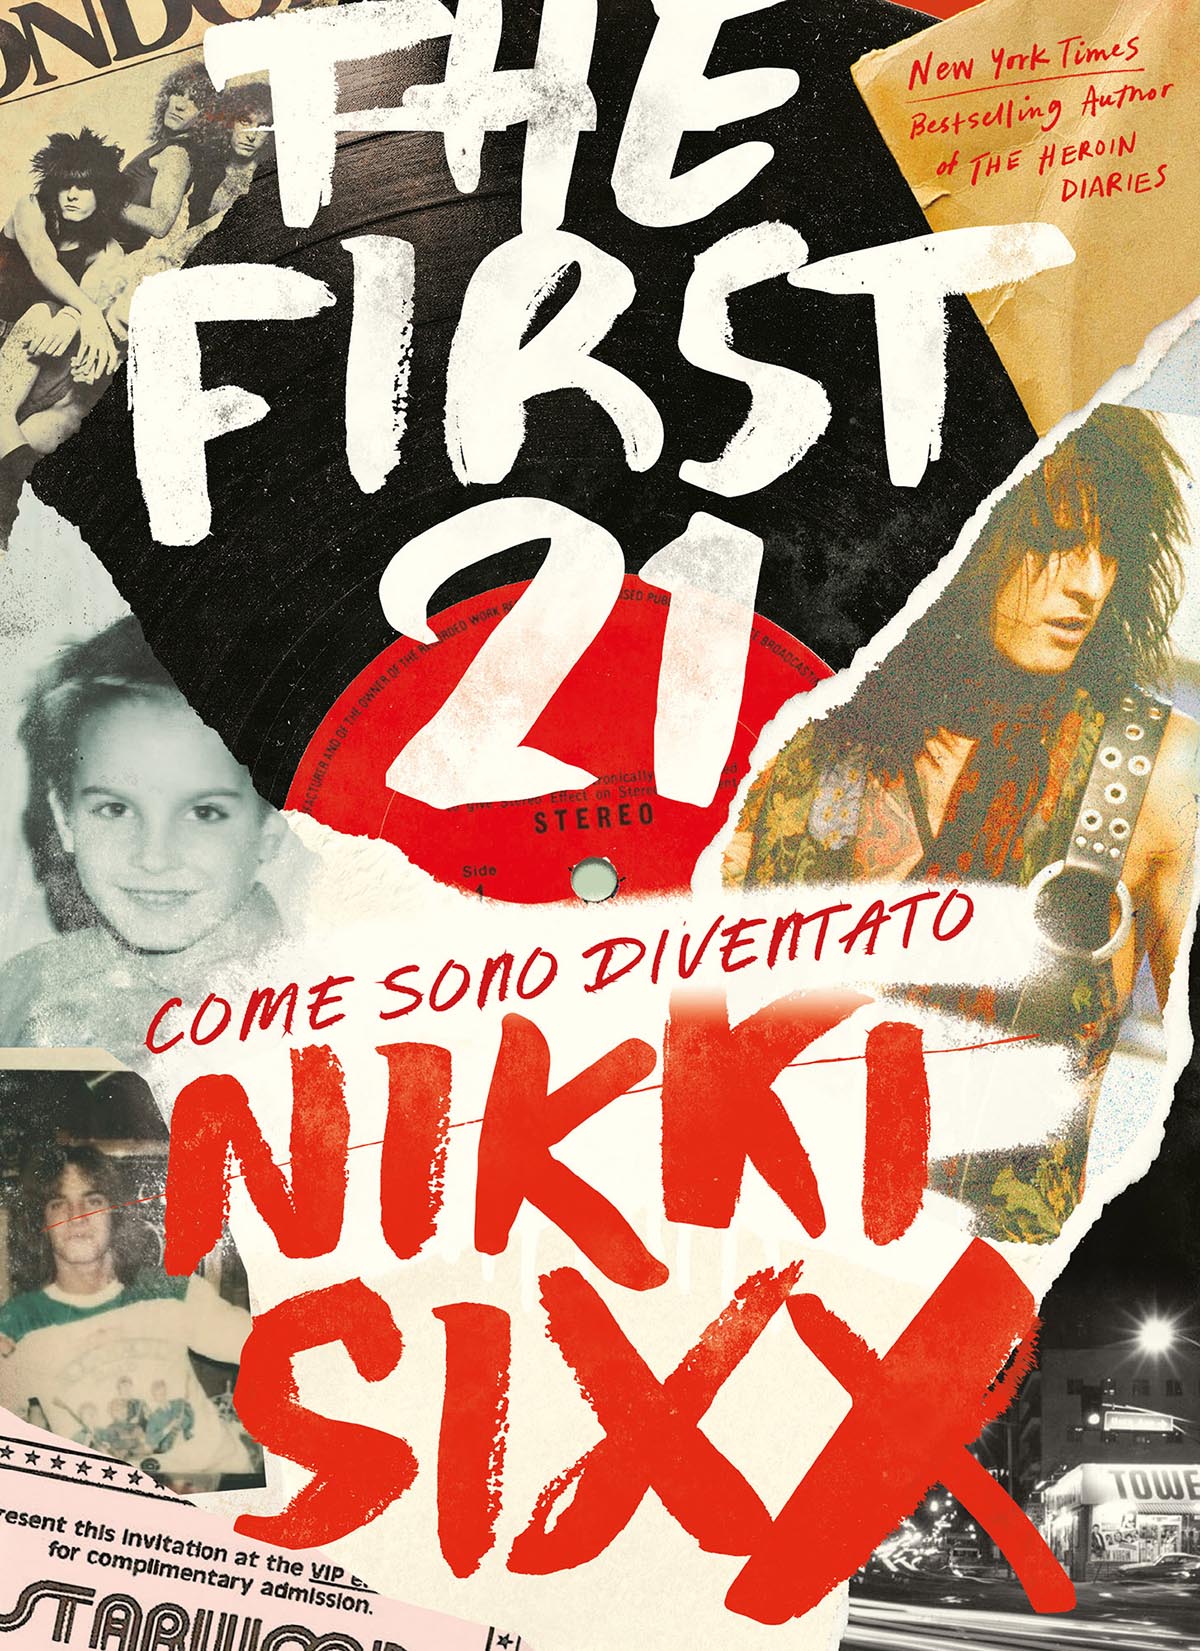 The first 21 - Nikki Sixx